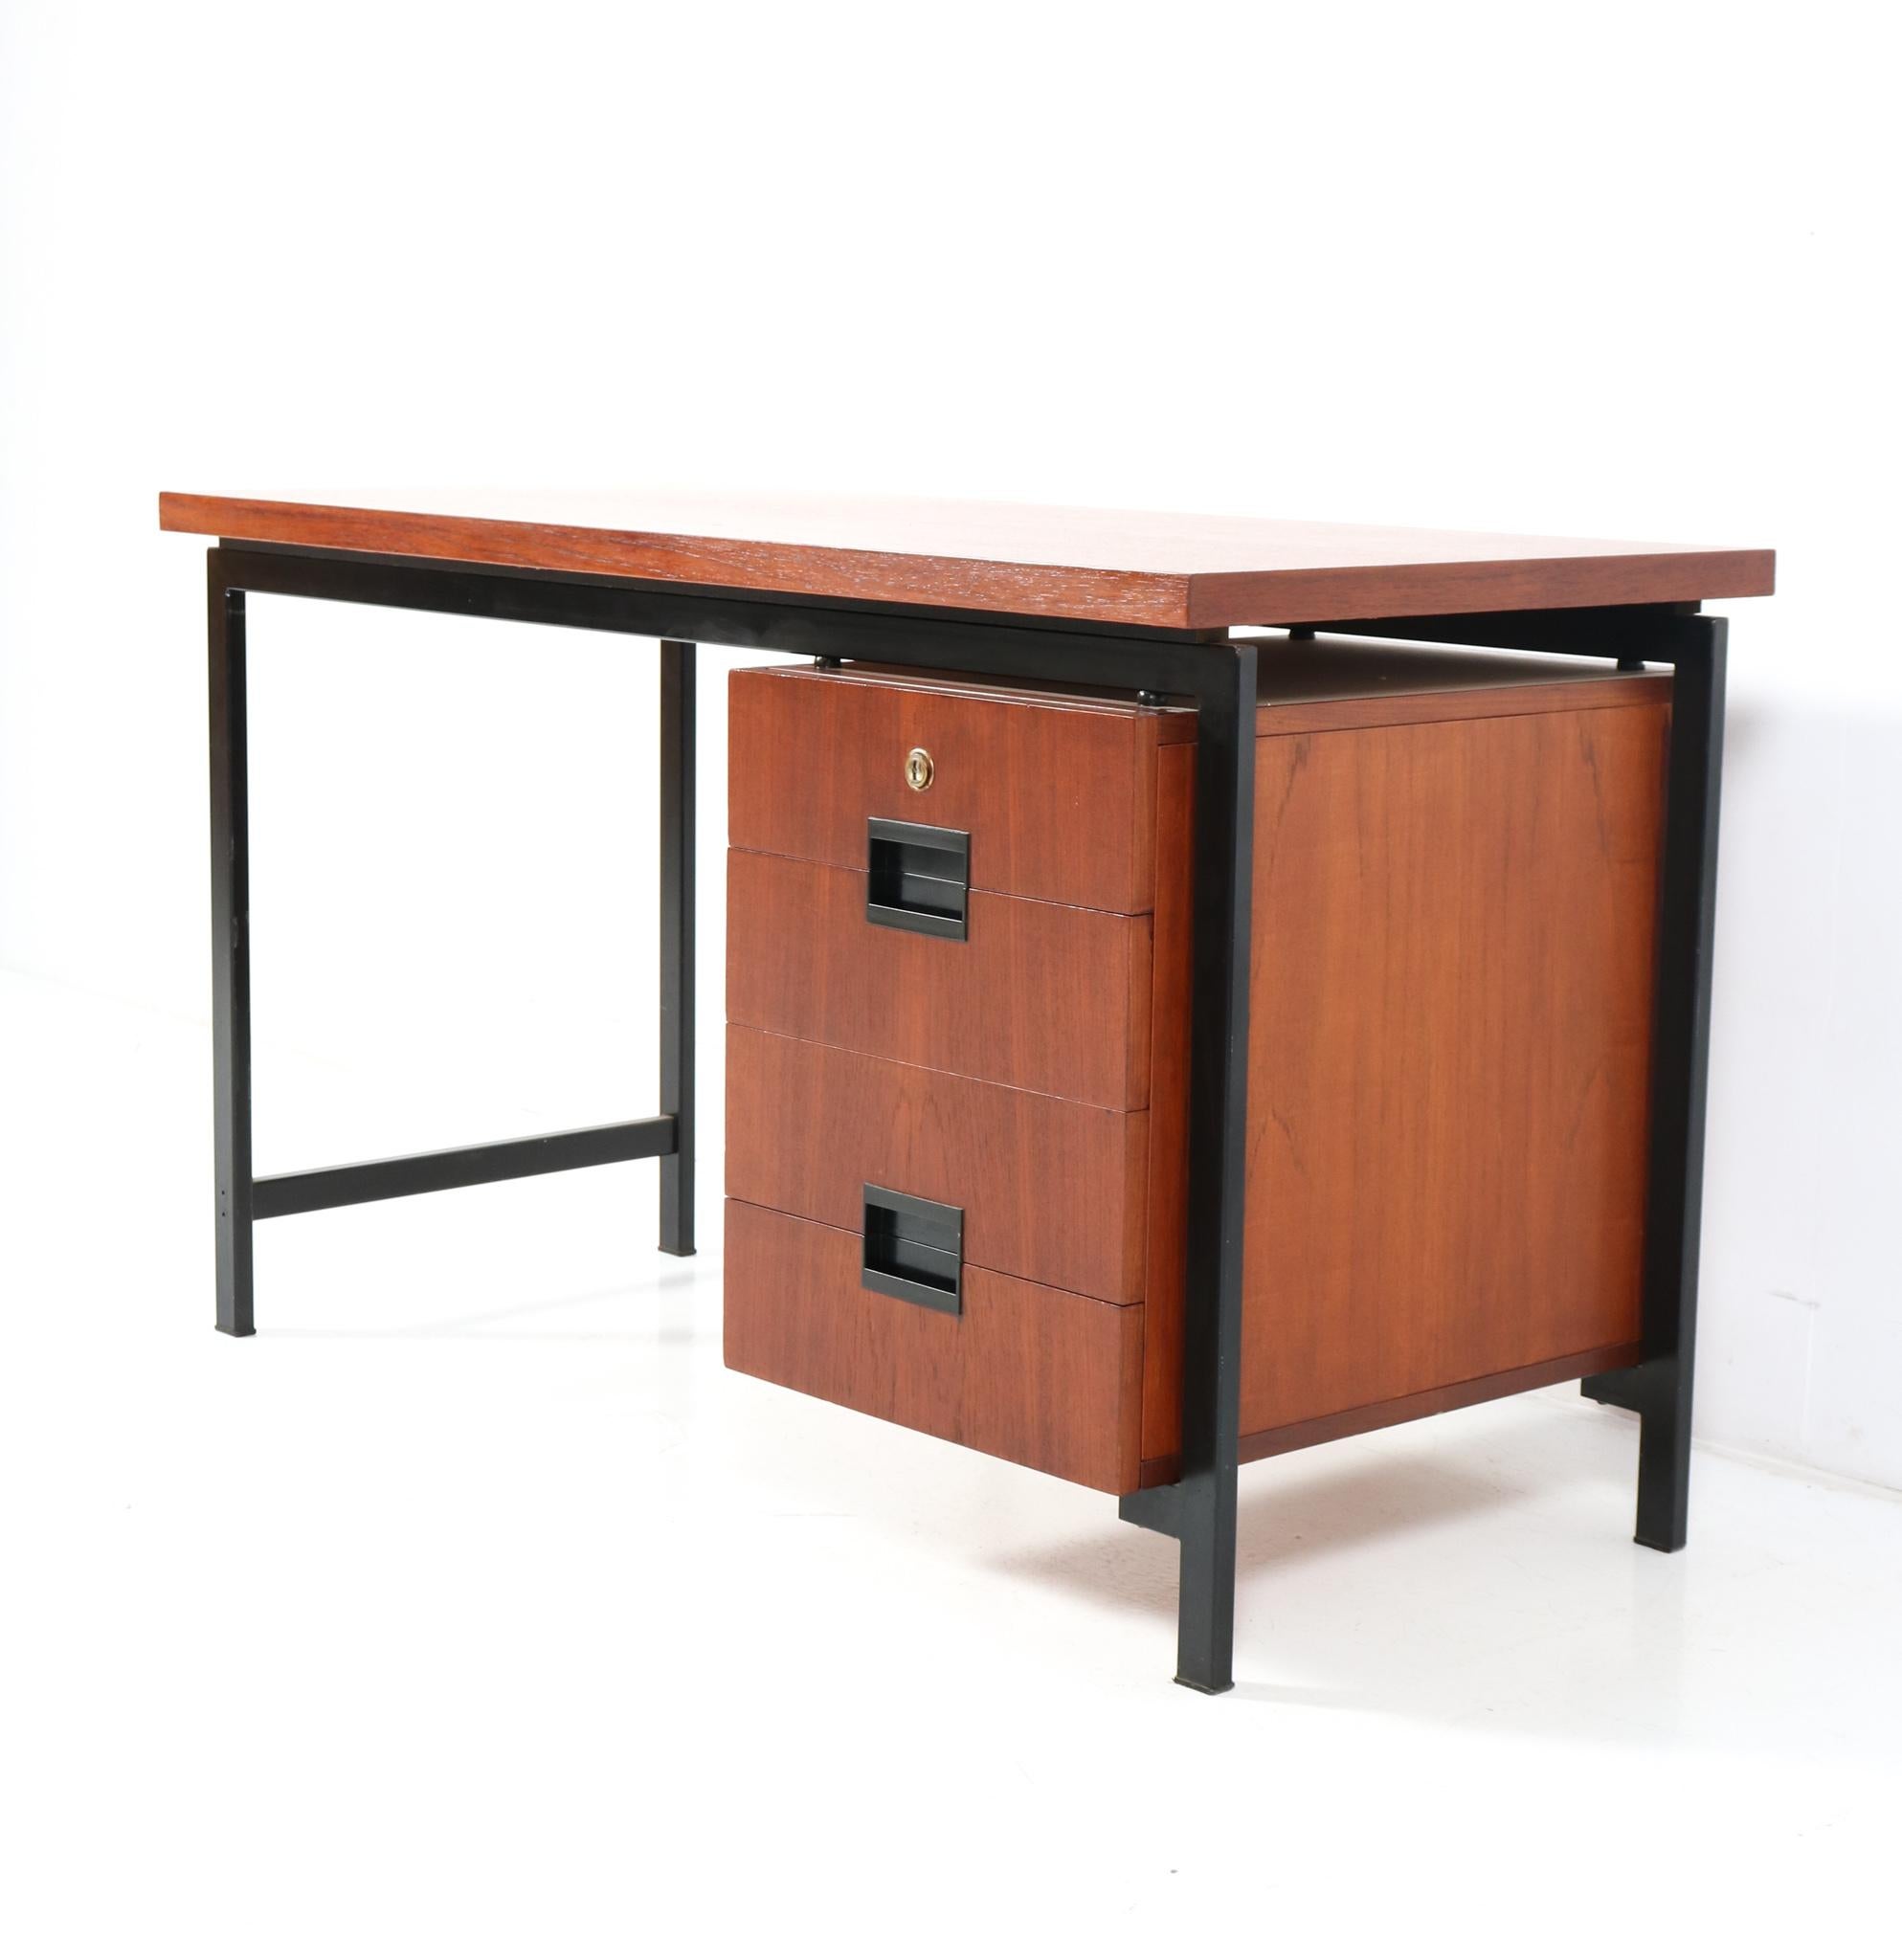 Mid-20th Century Japanese Series EU01 Teak Desk by Cees Braakman for Pastoe, 1958